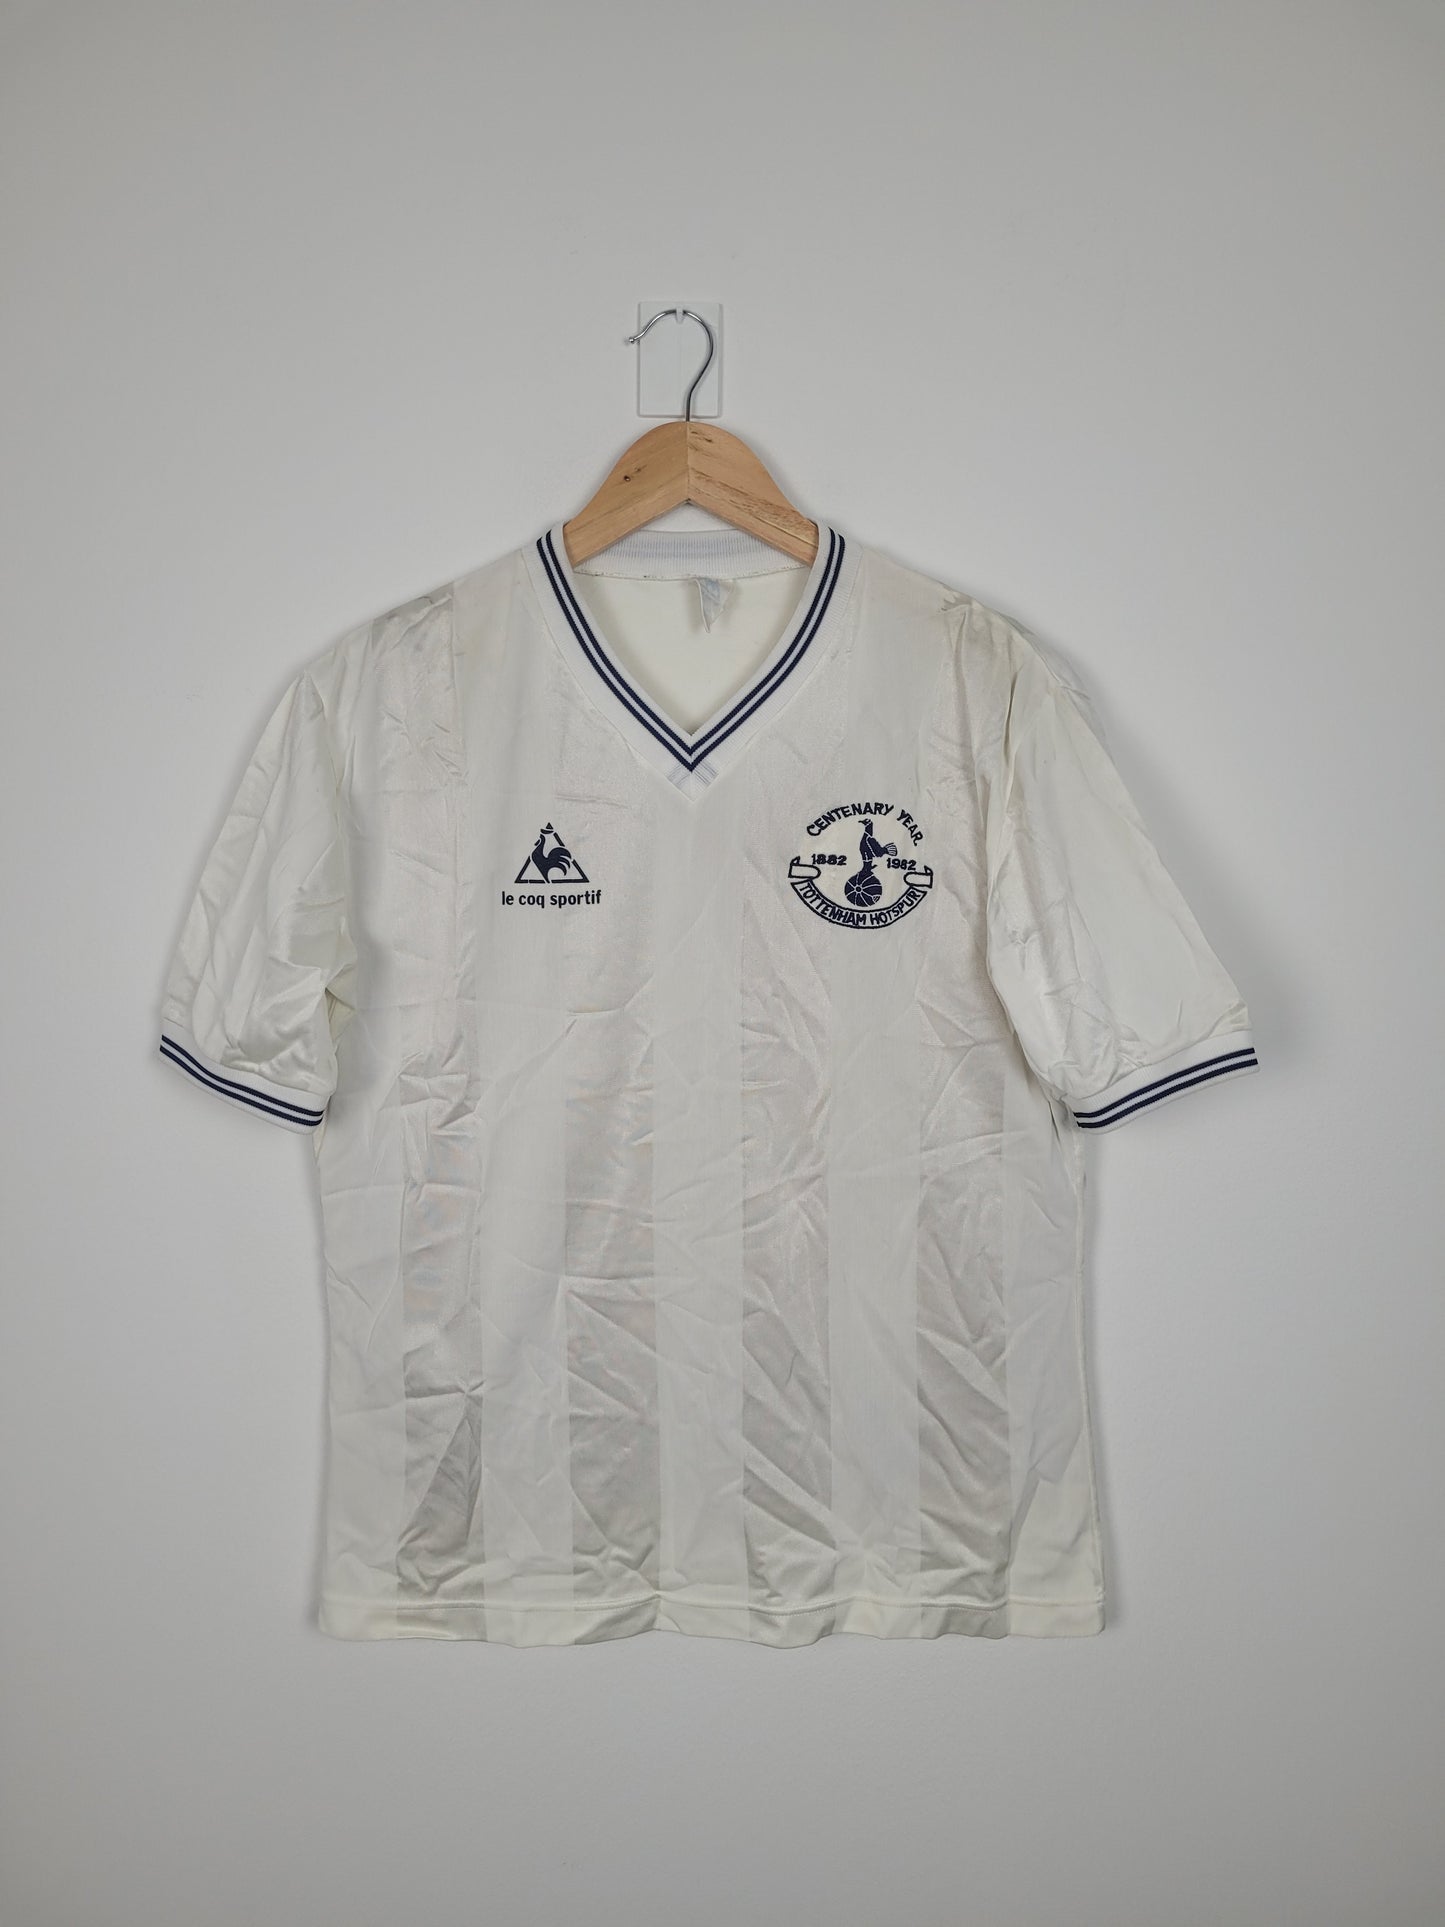 
                  
                    Original Tottenham Hotspur F.C. Home Jersey 1982-1983 - M
                  
                